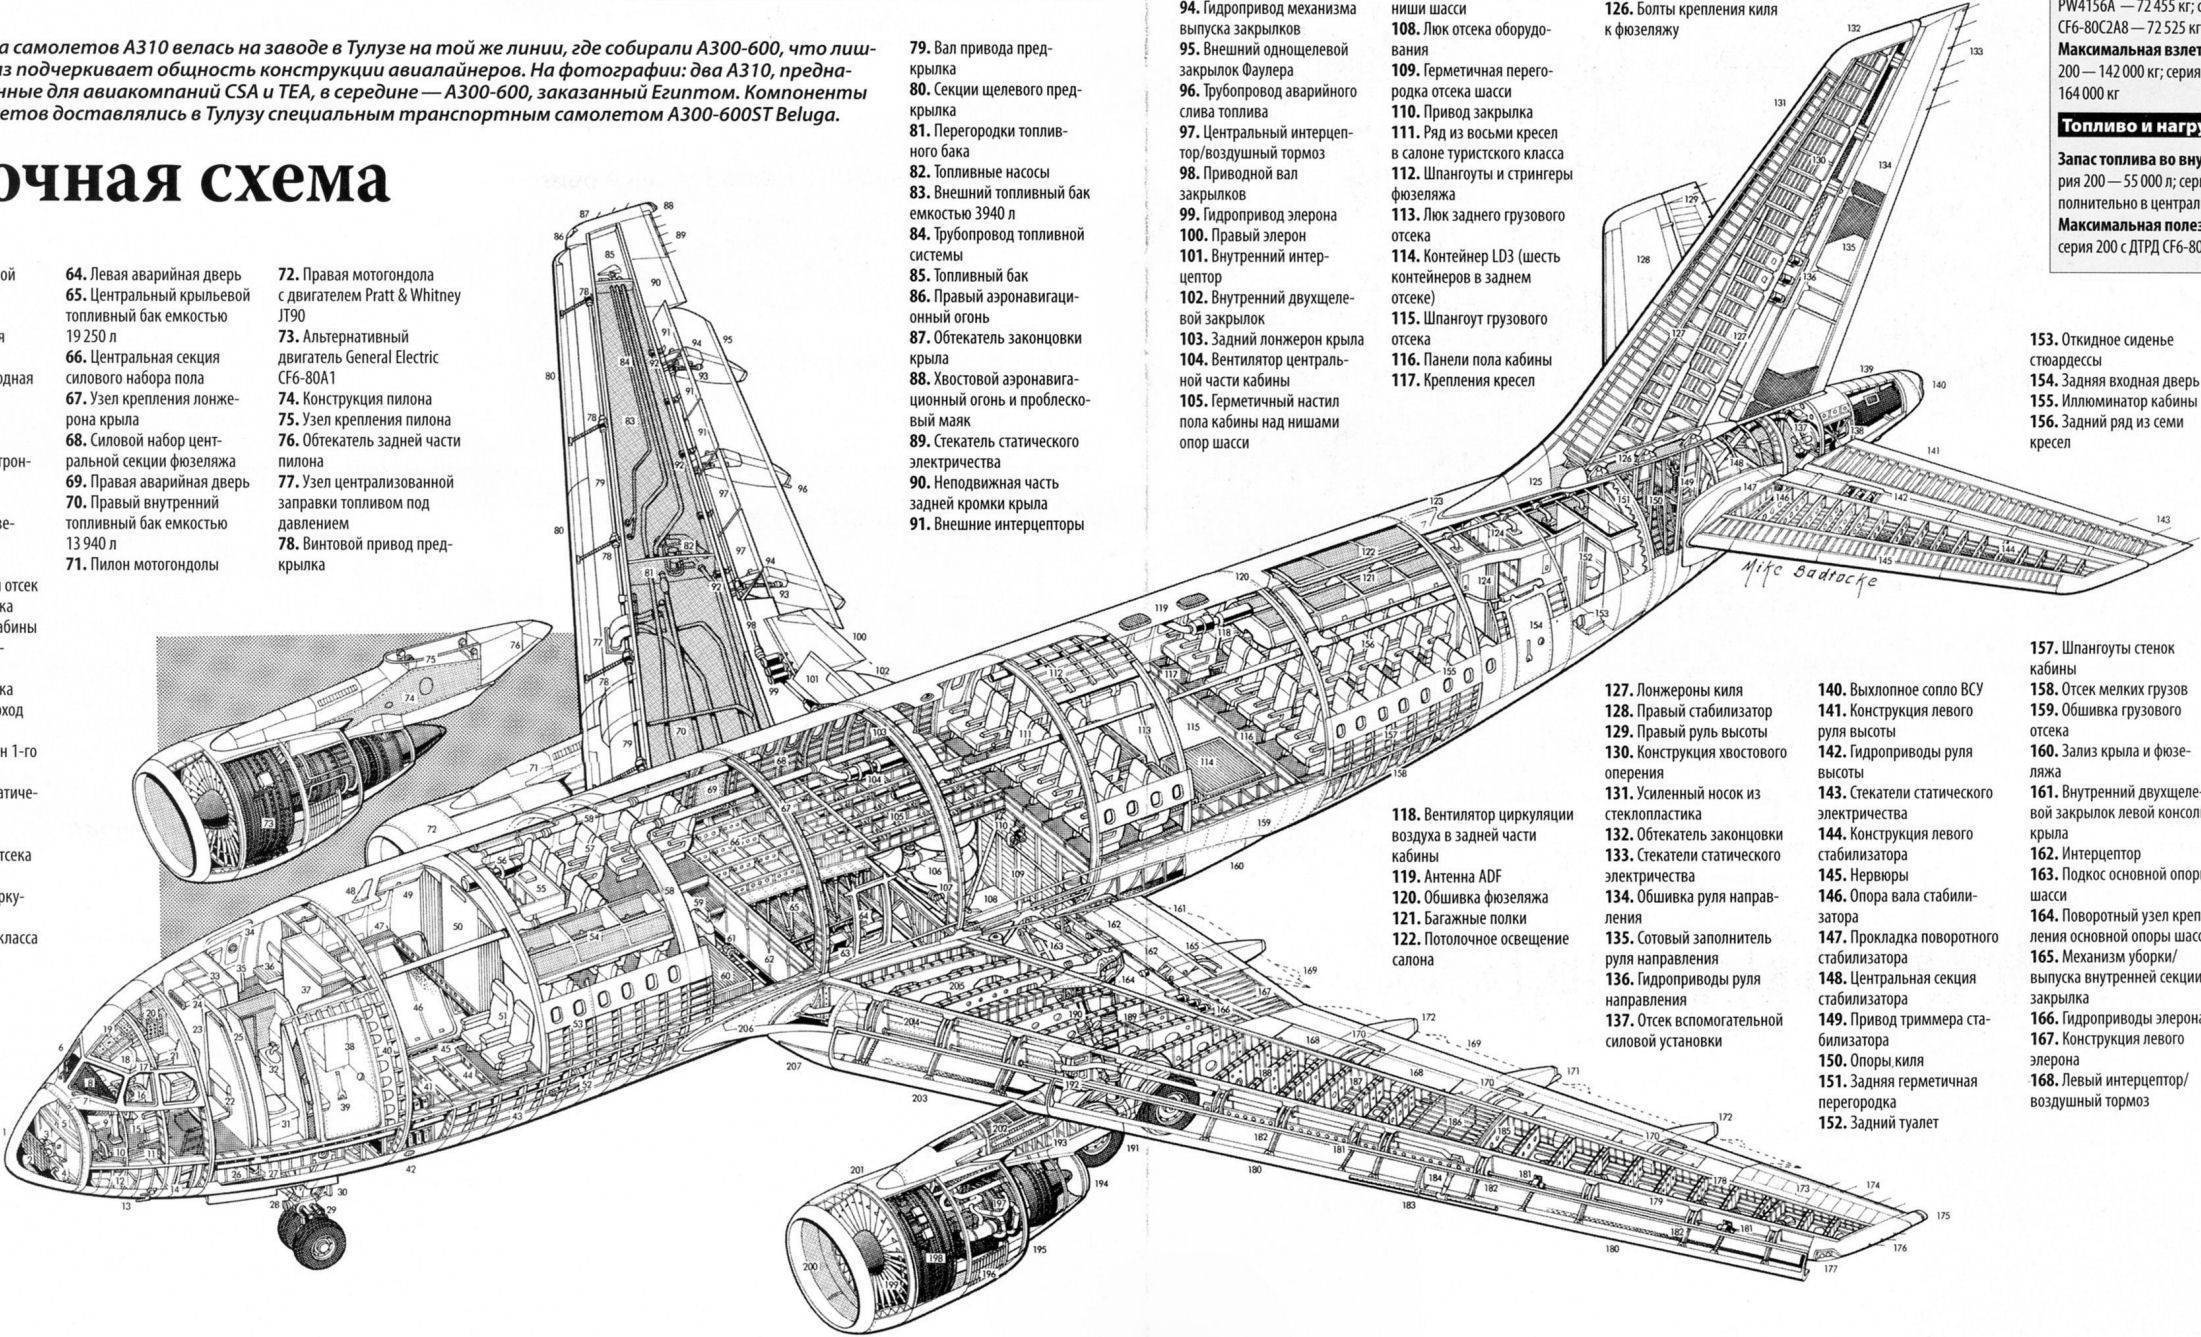 Airbus a340 — википедия переиздание // wiki 2